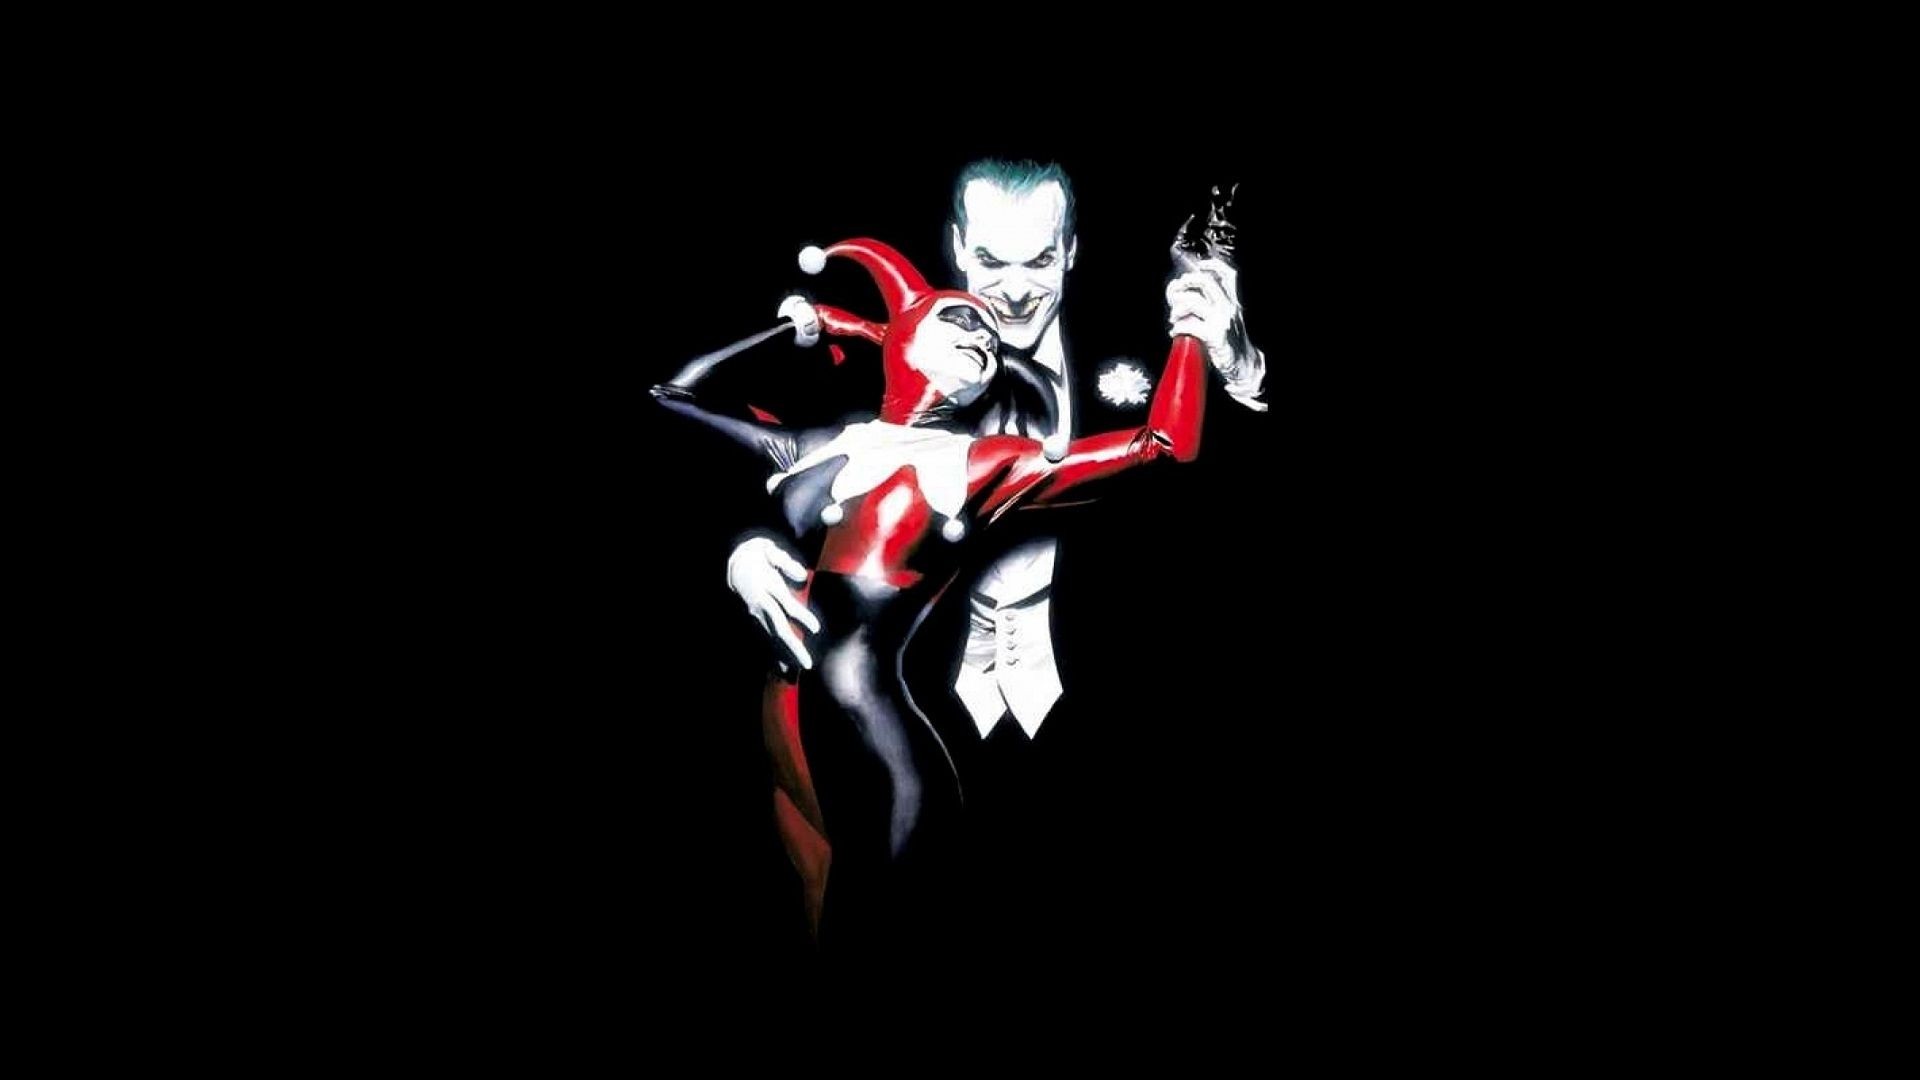  Harley  Quinn  and Joker  wallpaper    Download  free 